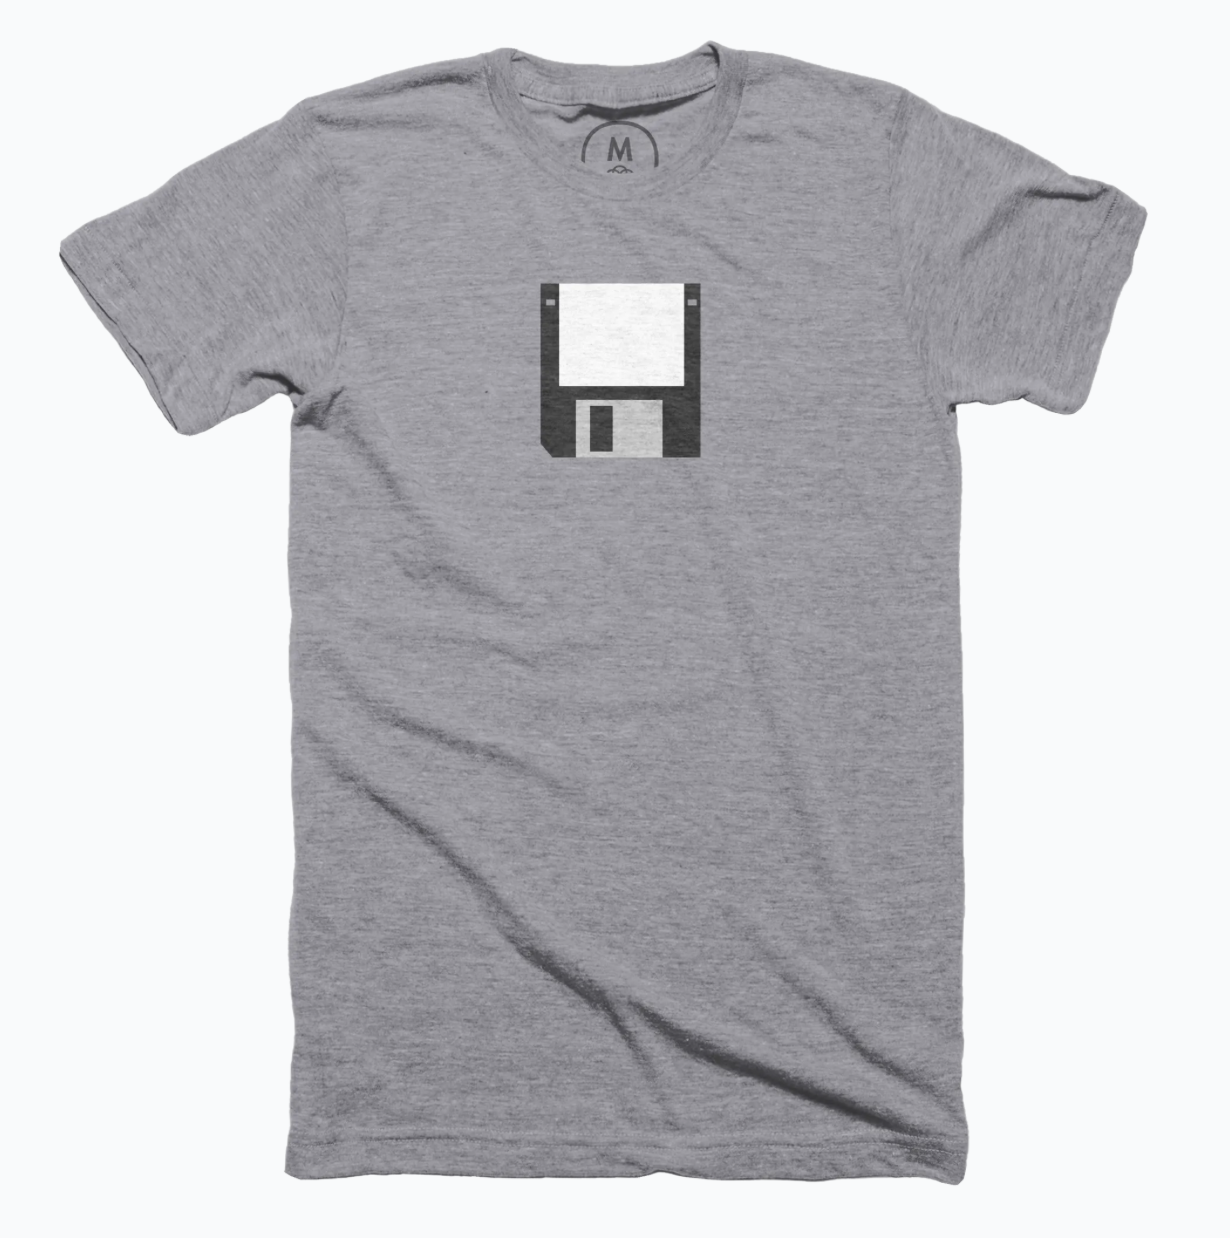 Grey shirt with a black 3.5 inch floppy disk.